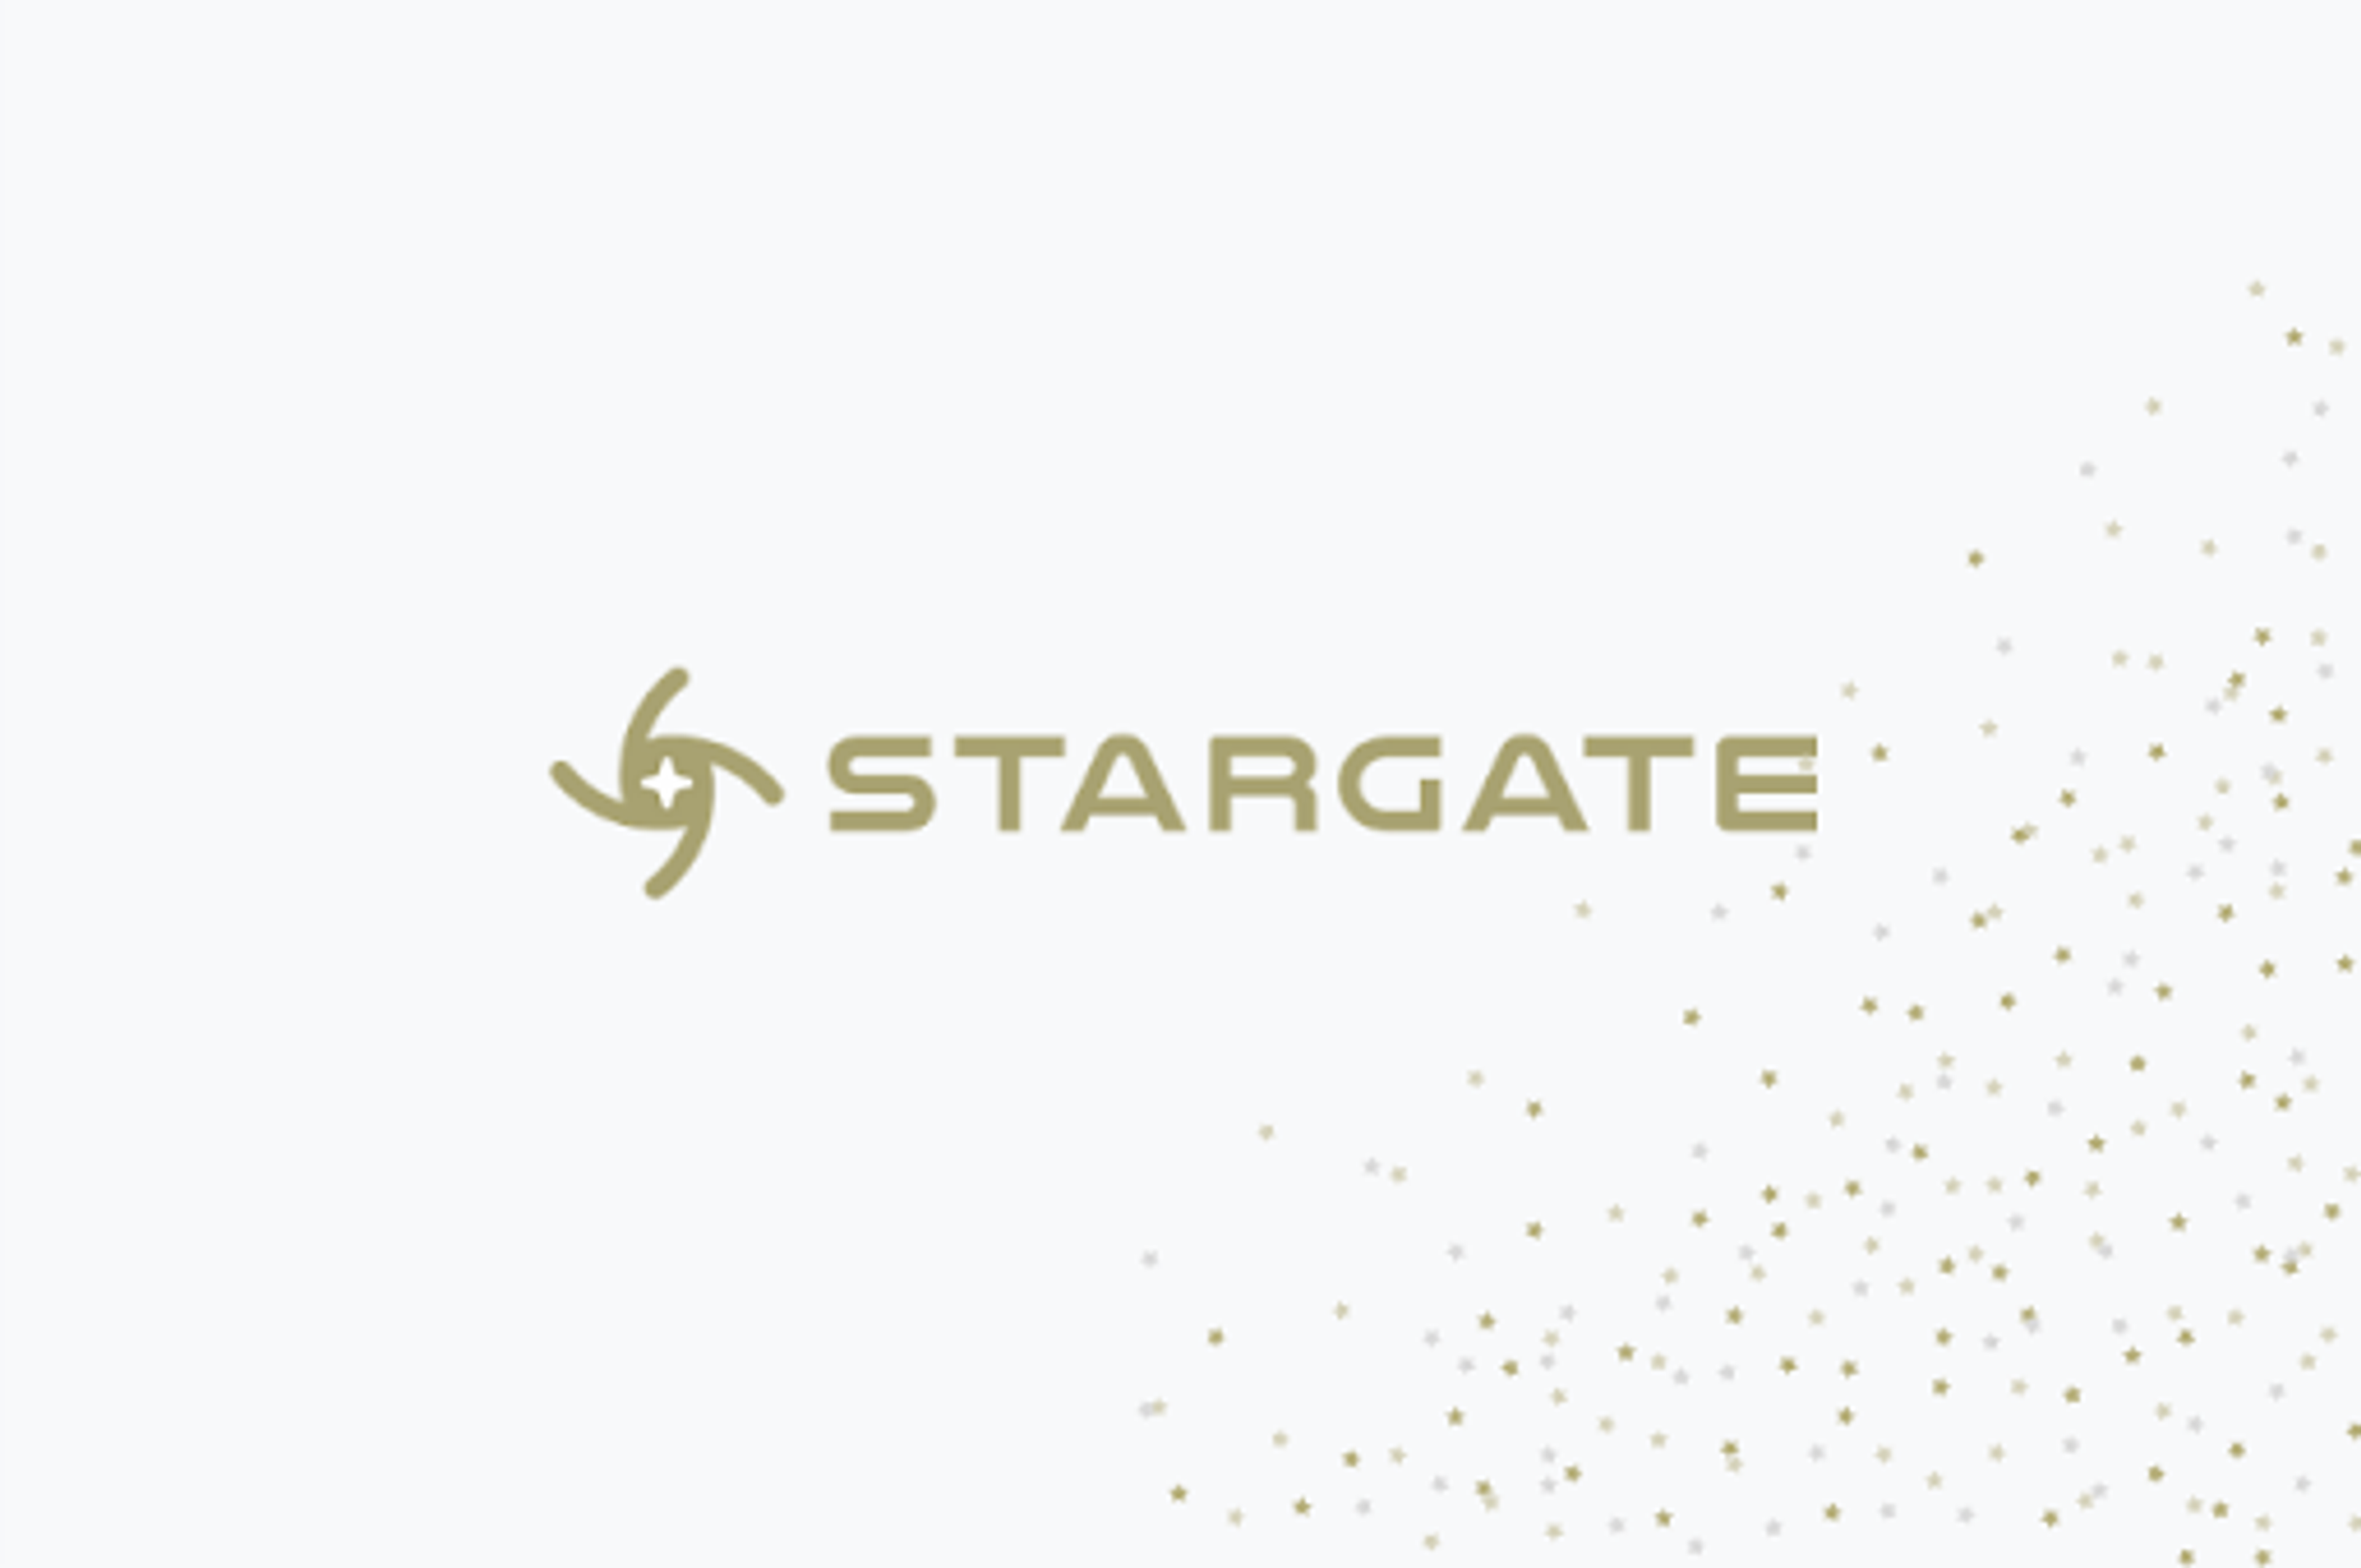 Blasting Off into Stargate using HTTPie